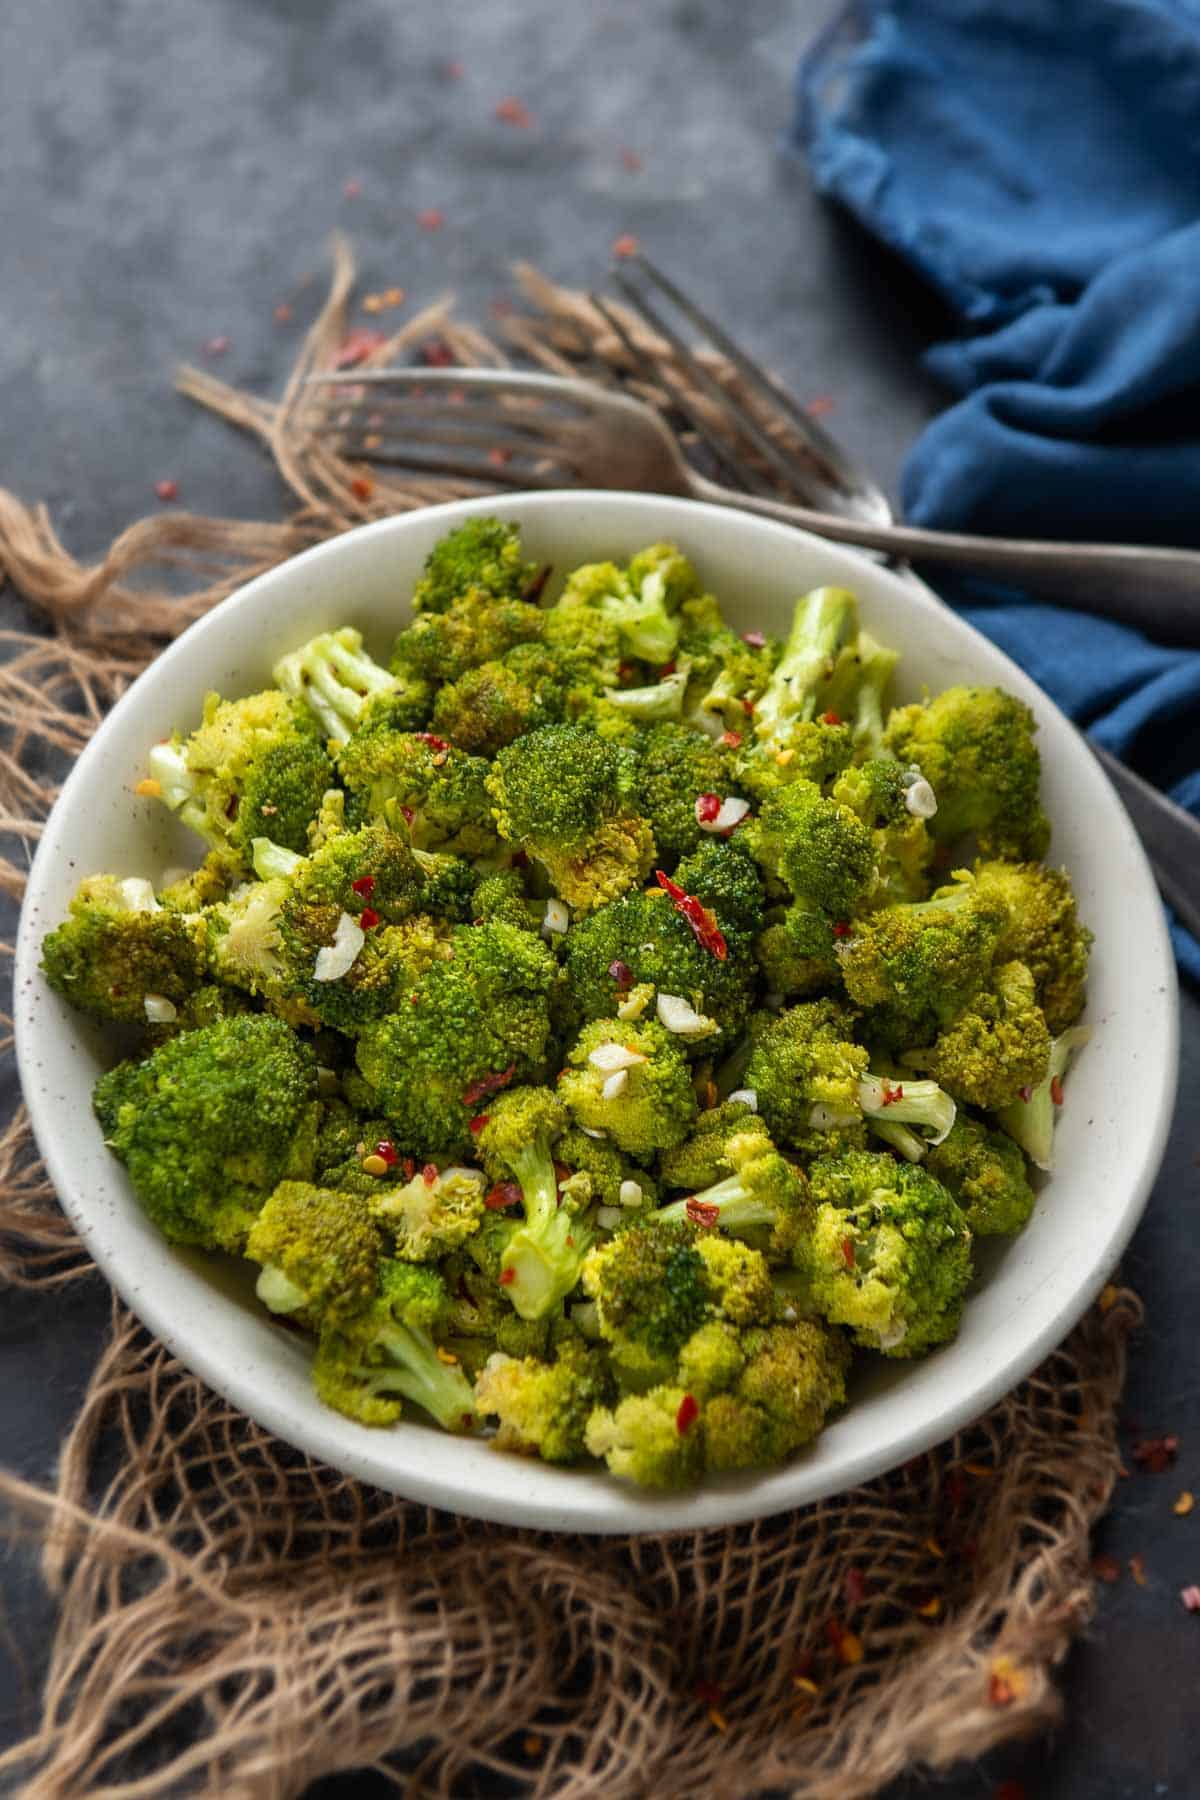 Spicy air fryer frozen broccoli recipe